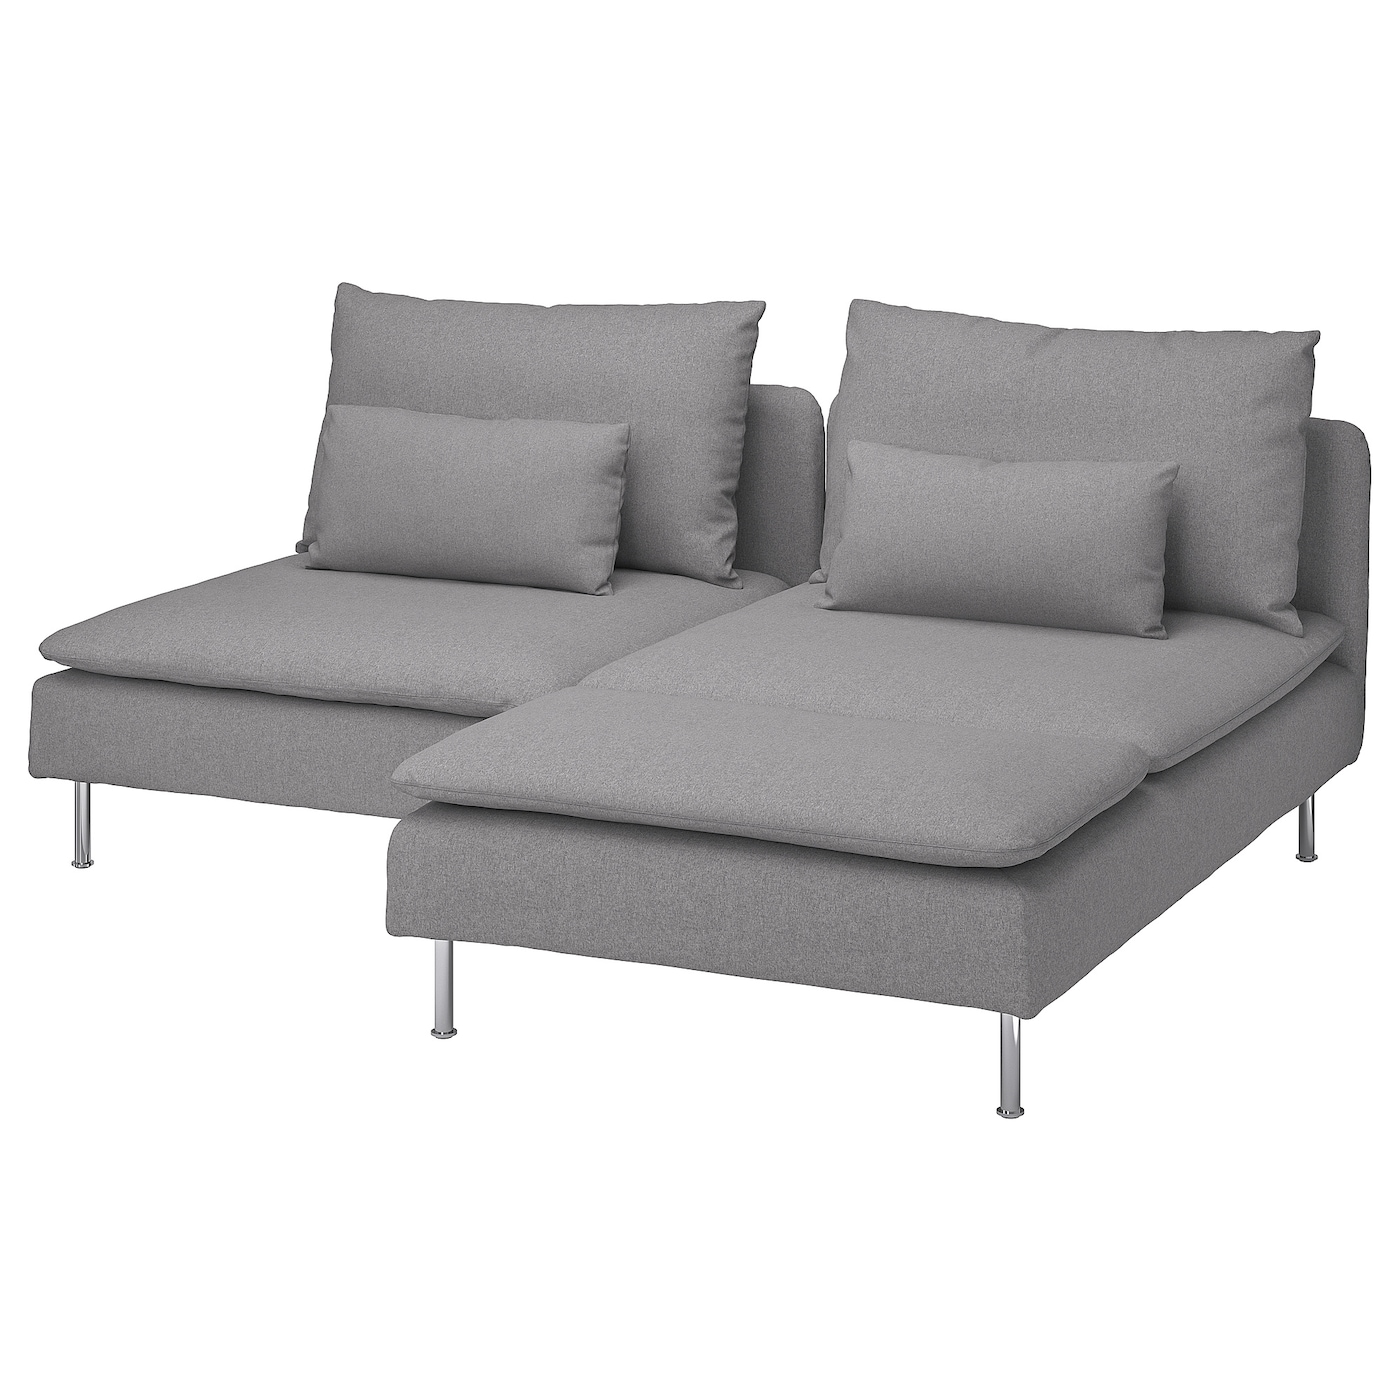 СЁДЕРХАМН 2 раскладывающихся дивана, Тонеруд серый SODERHAMN IKEA